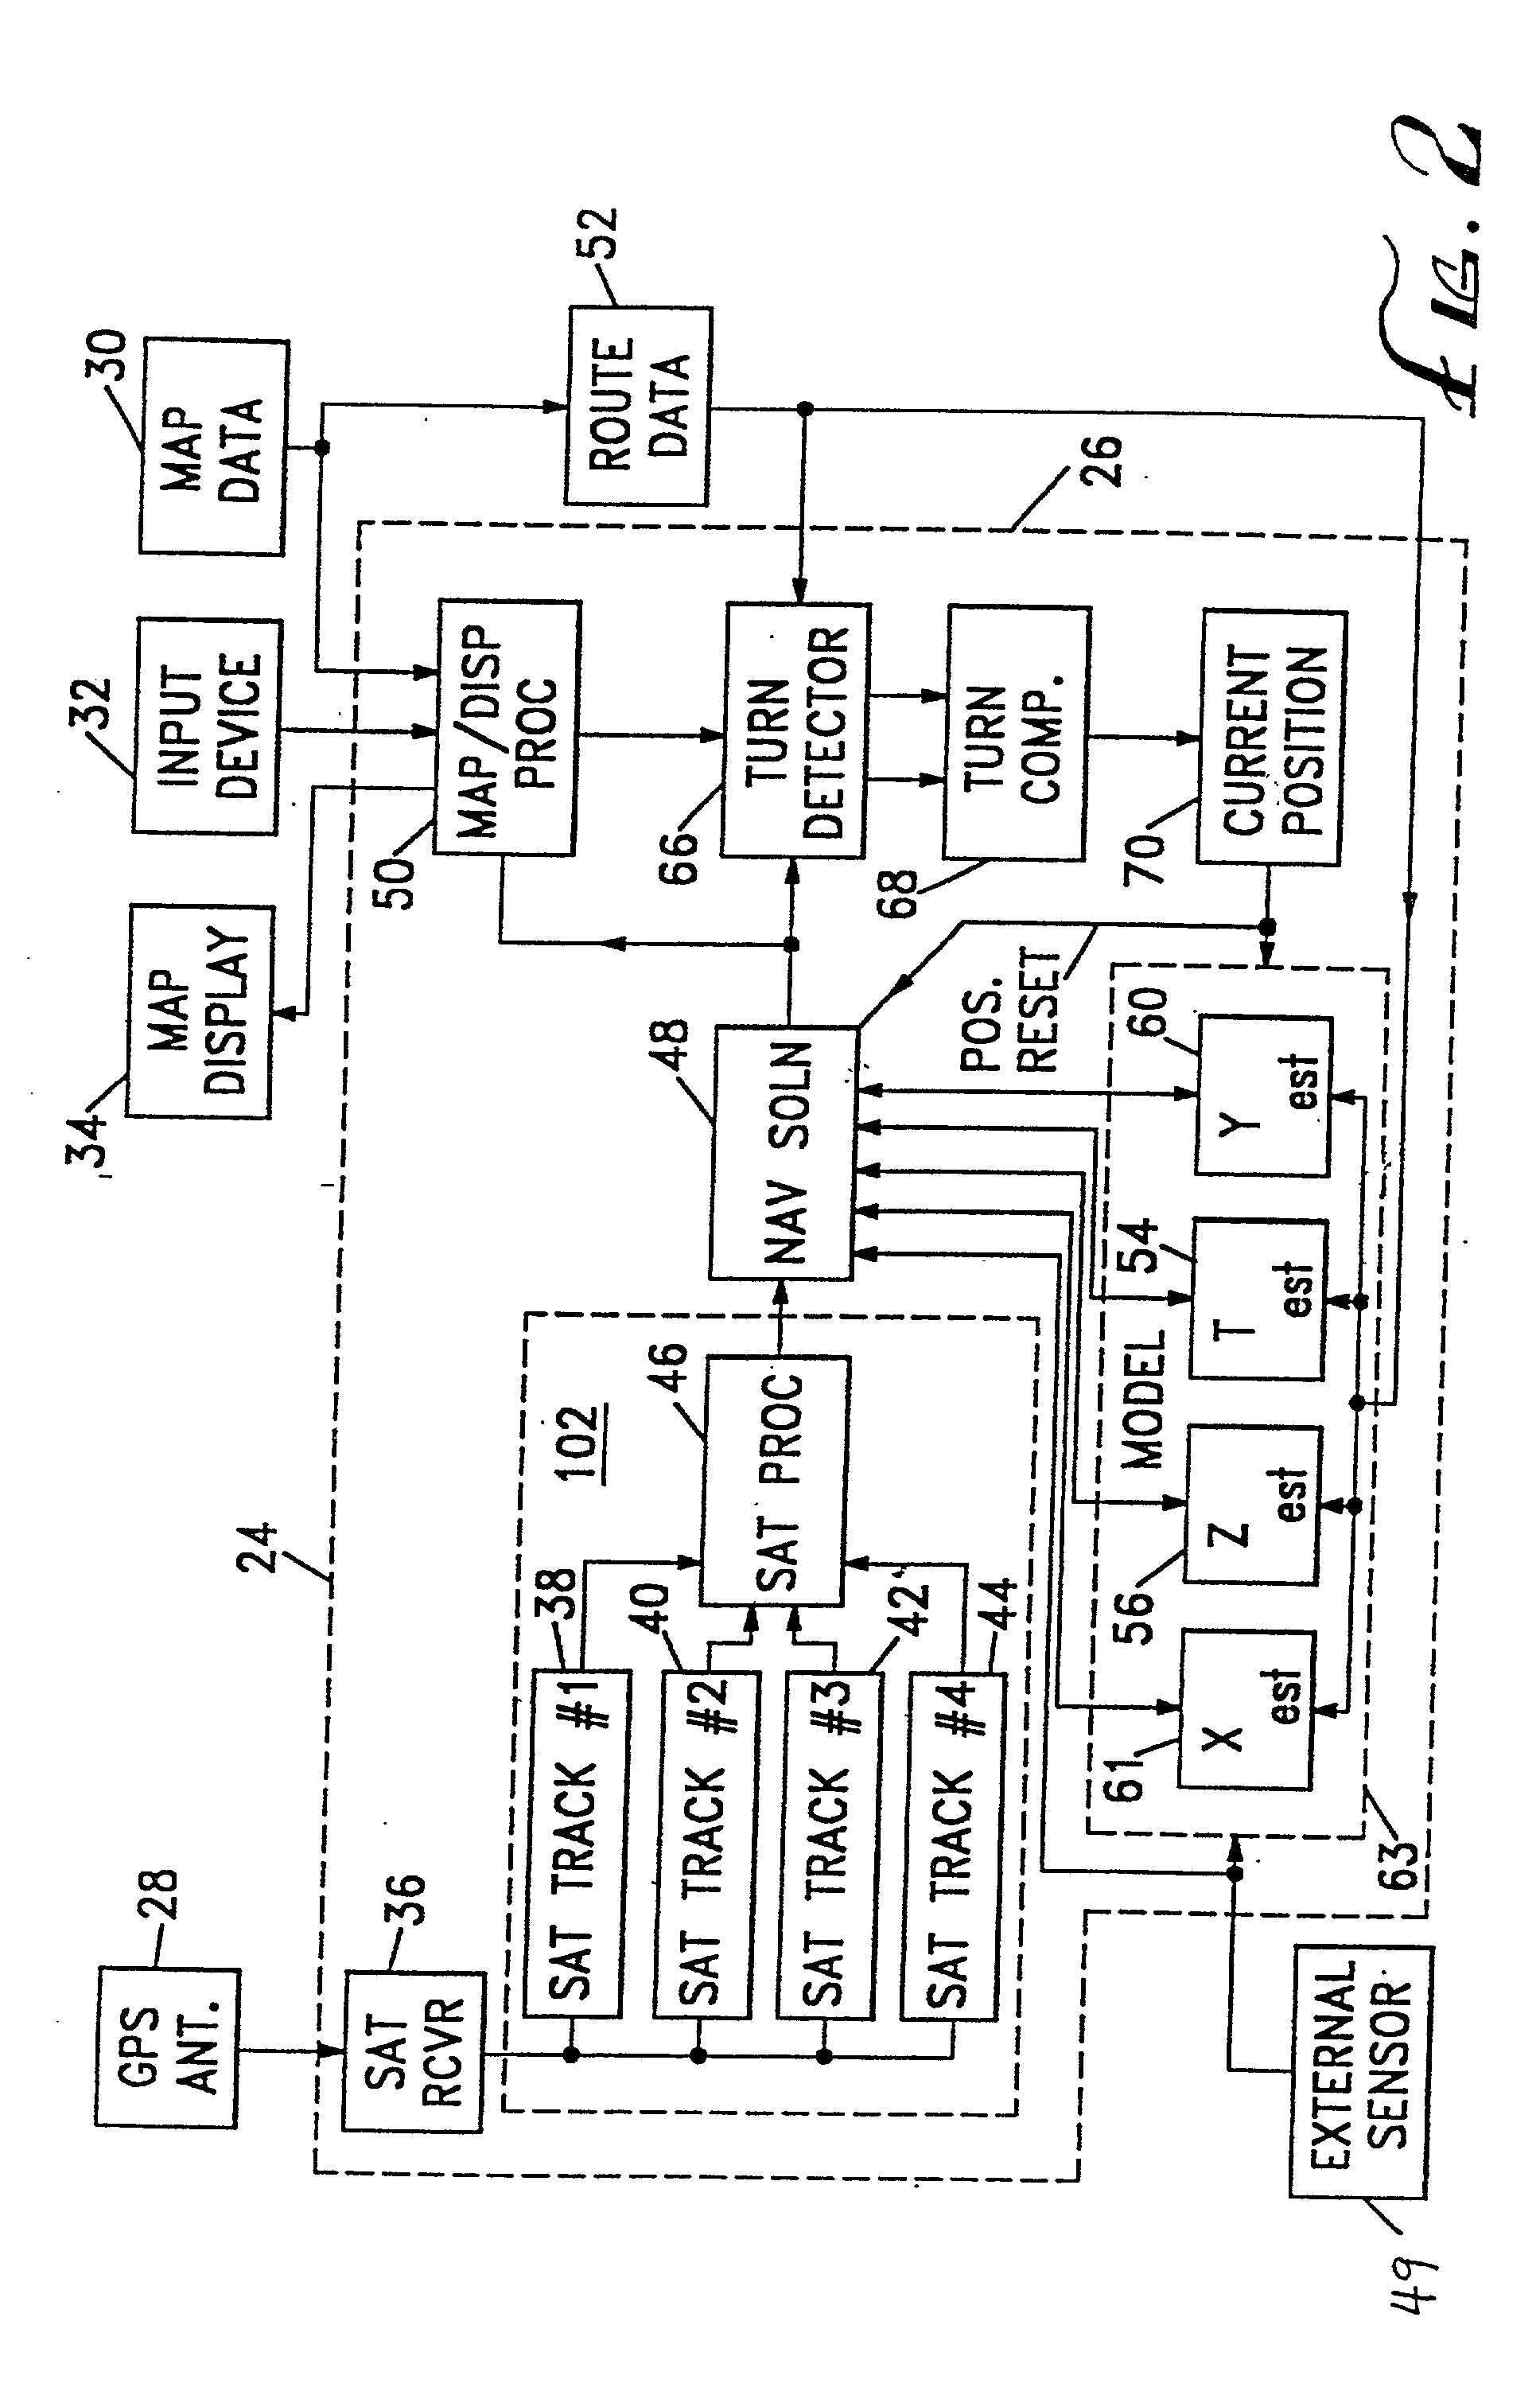 Spread spectrum receiver with multi-path correction